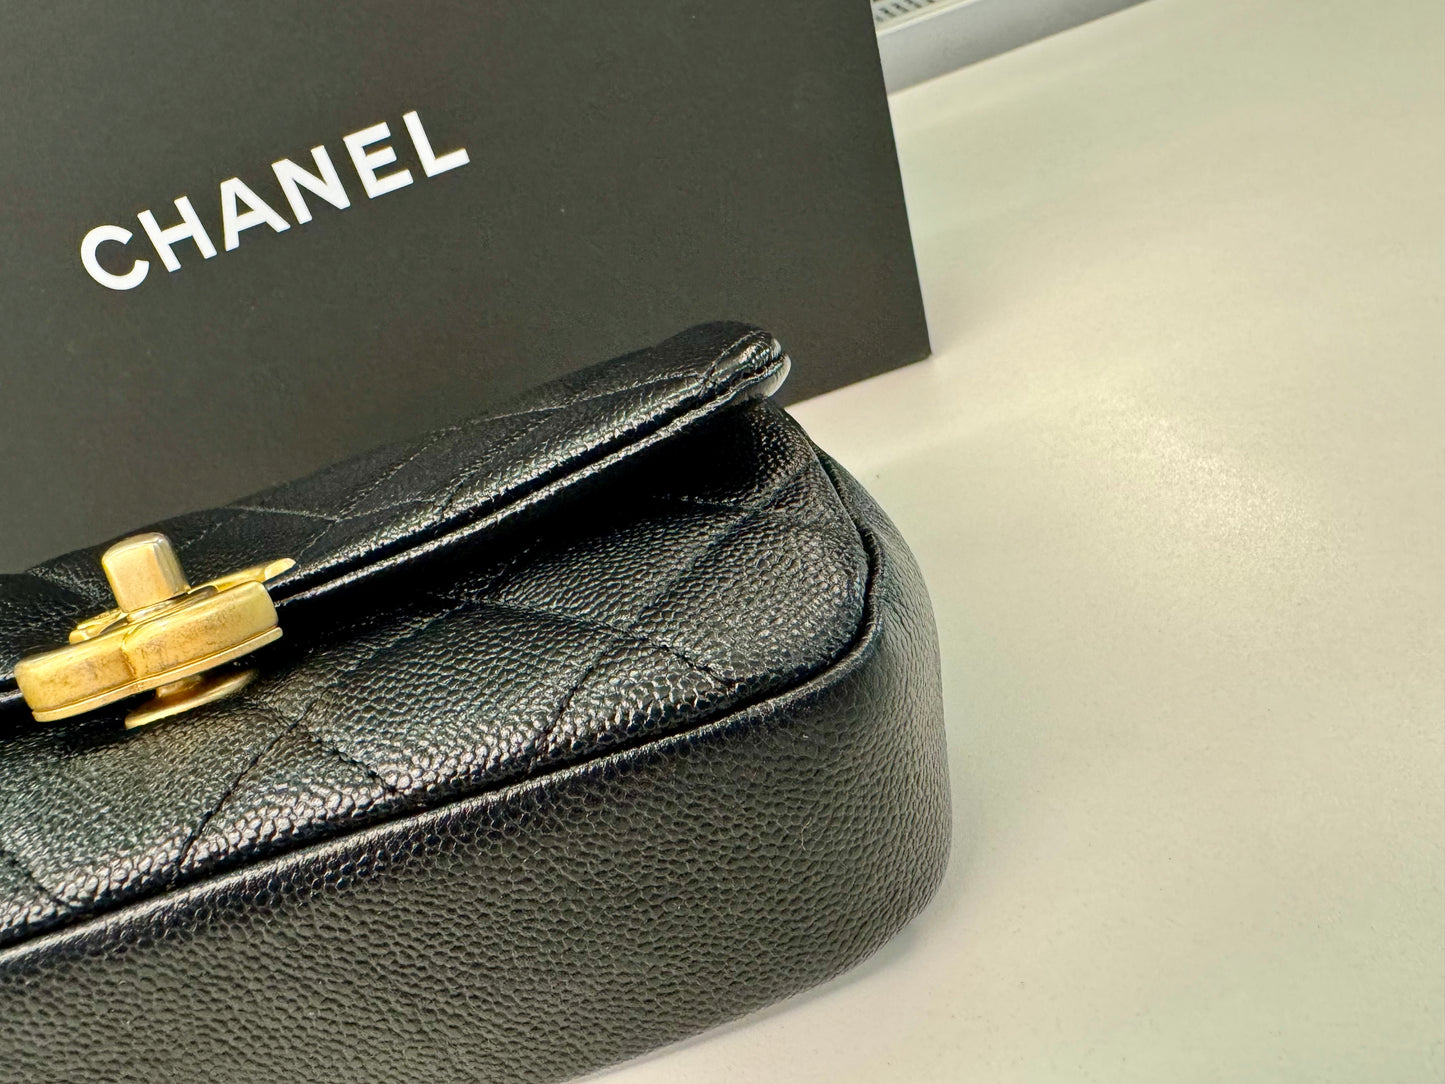 Preloved Chanel Melody Belt bag Black with GHW